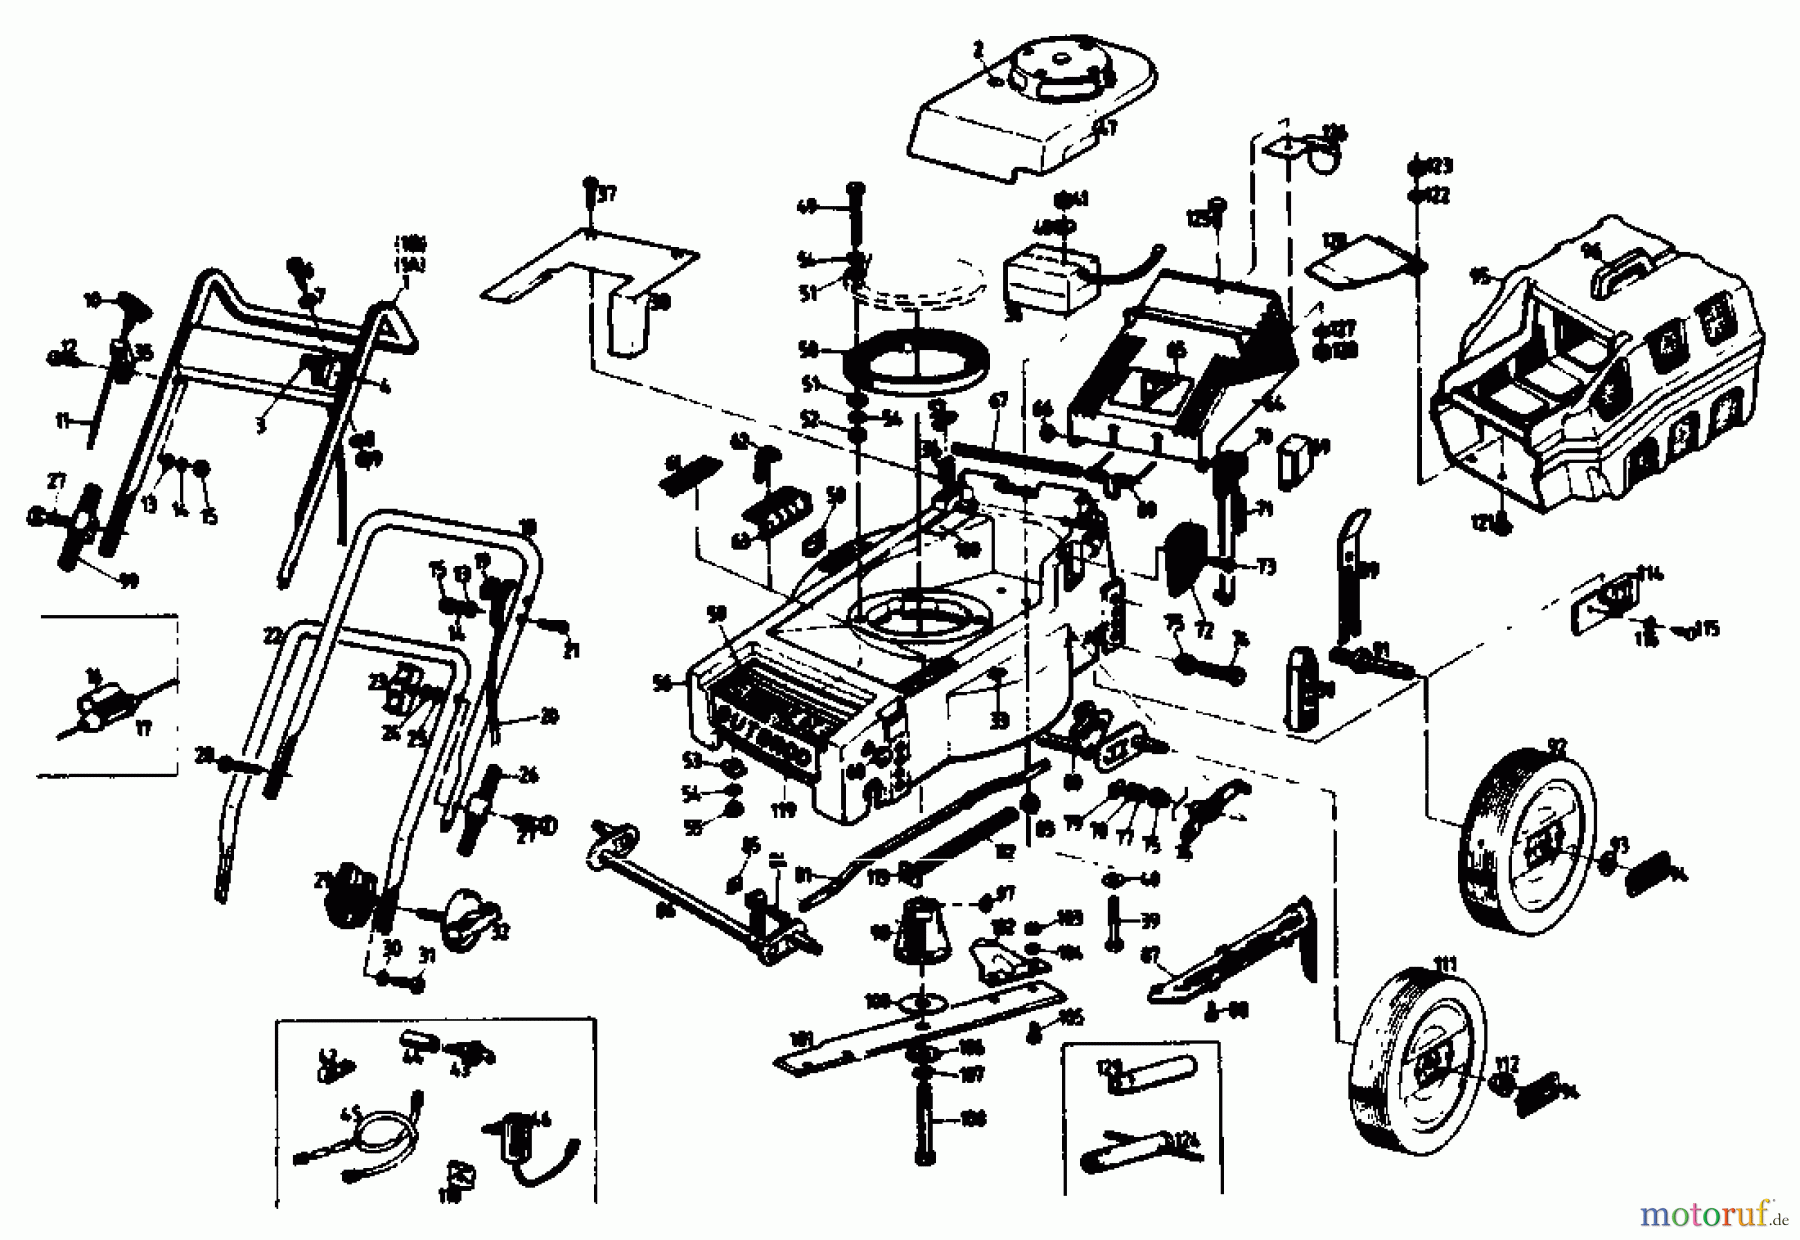  Gutbrod Petrol mower HB 40 LBS 02896.05  (1989) Basic machine